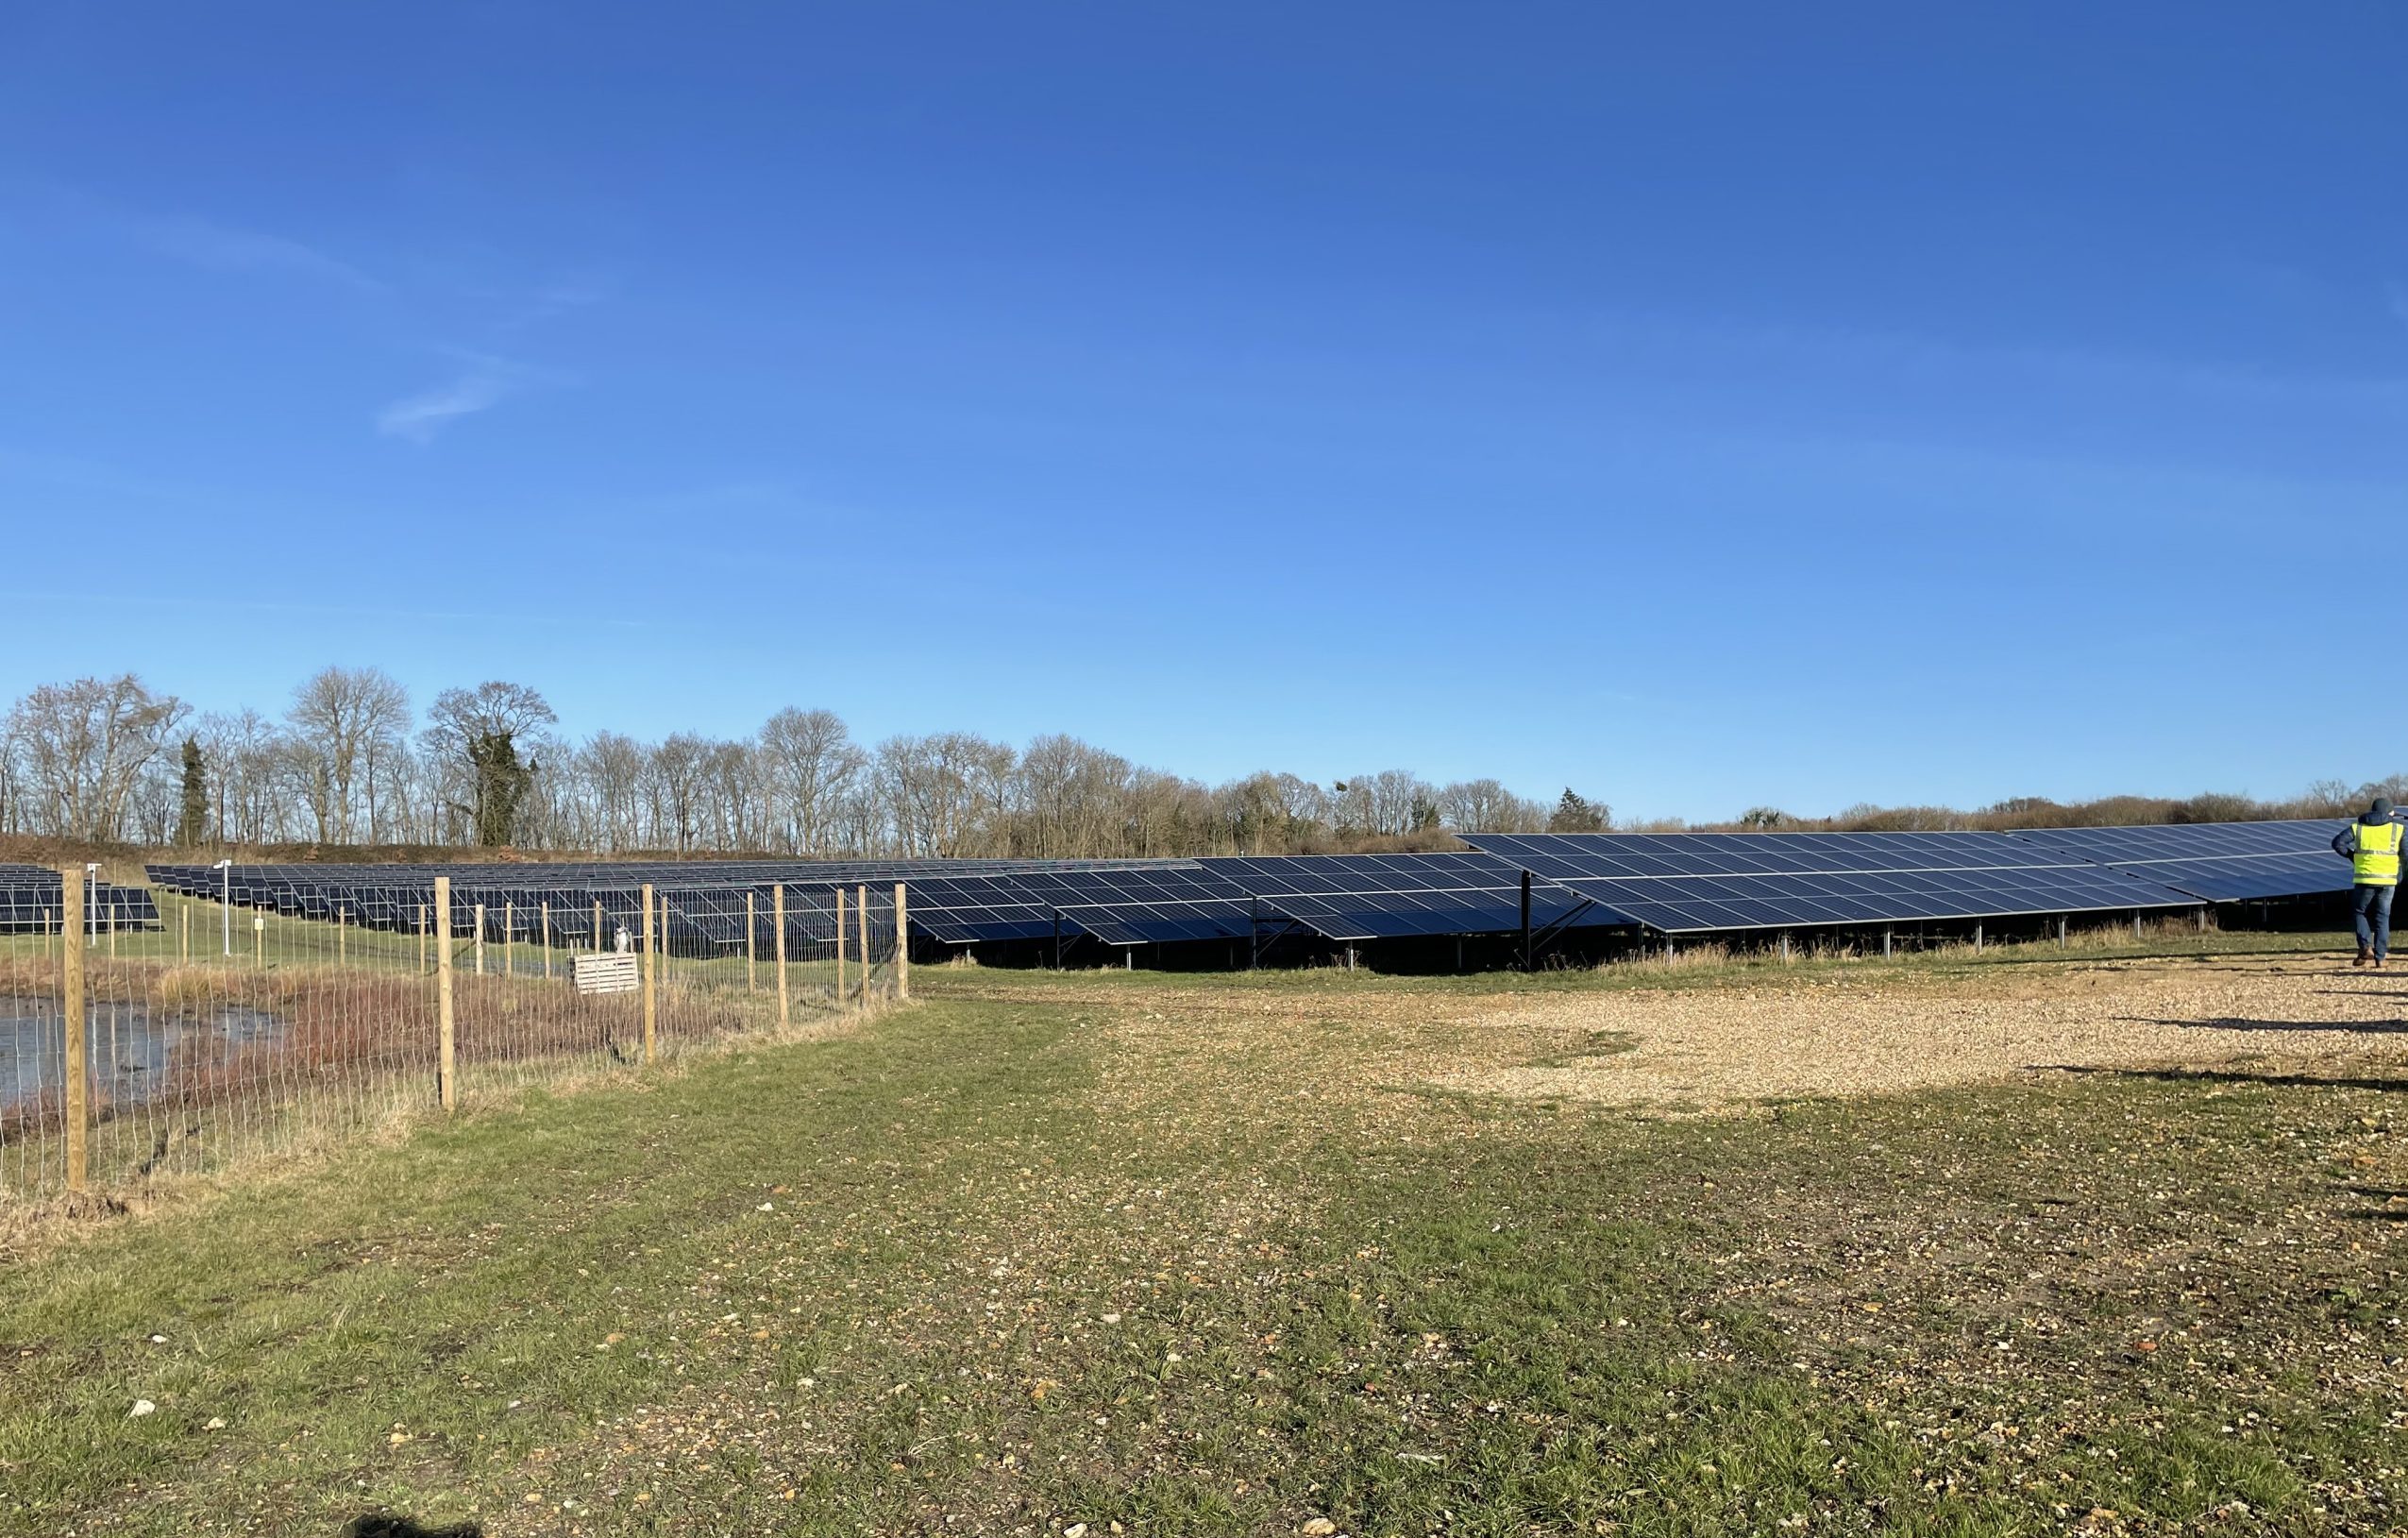 Hamer Warren Solar Farm, sited within the New Forest in Dorset.